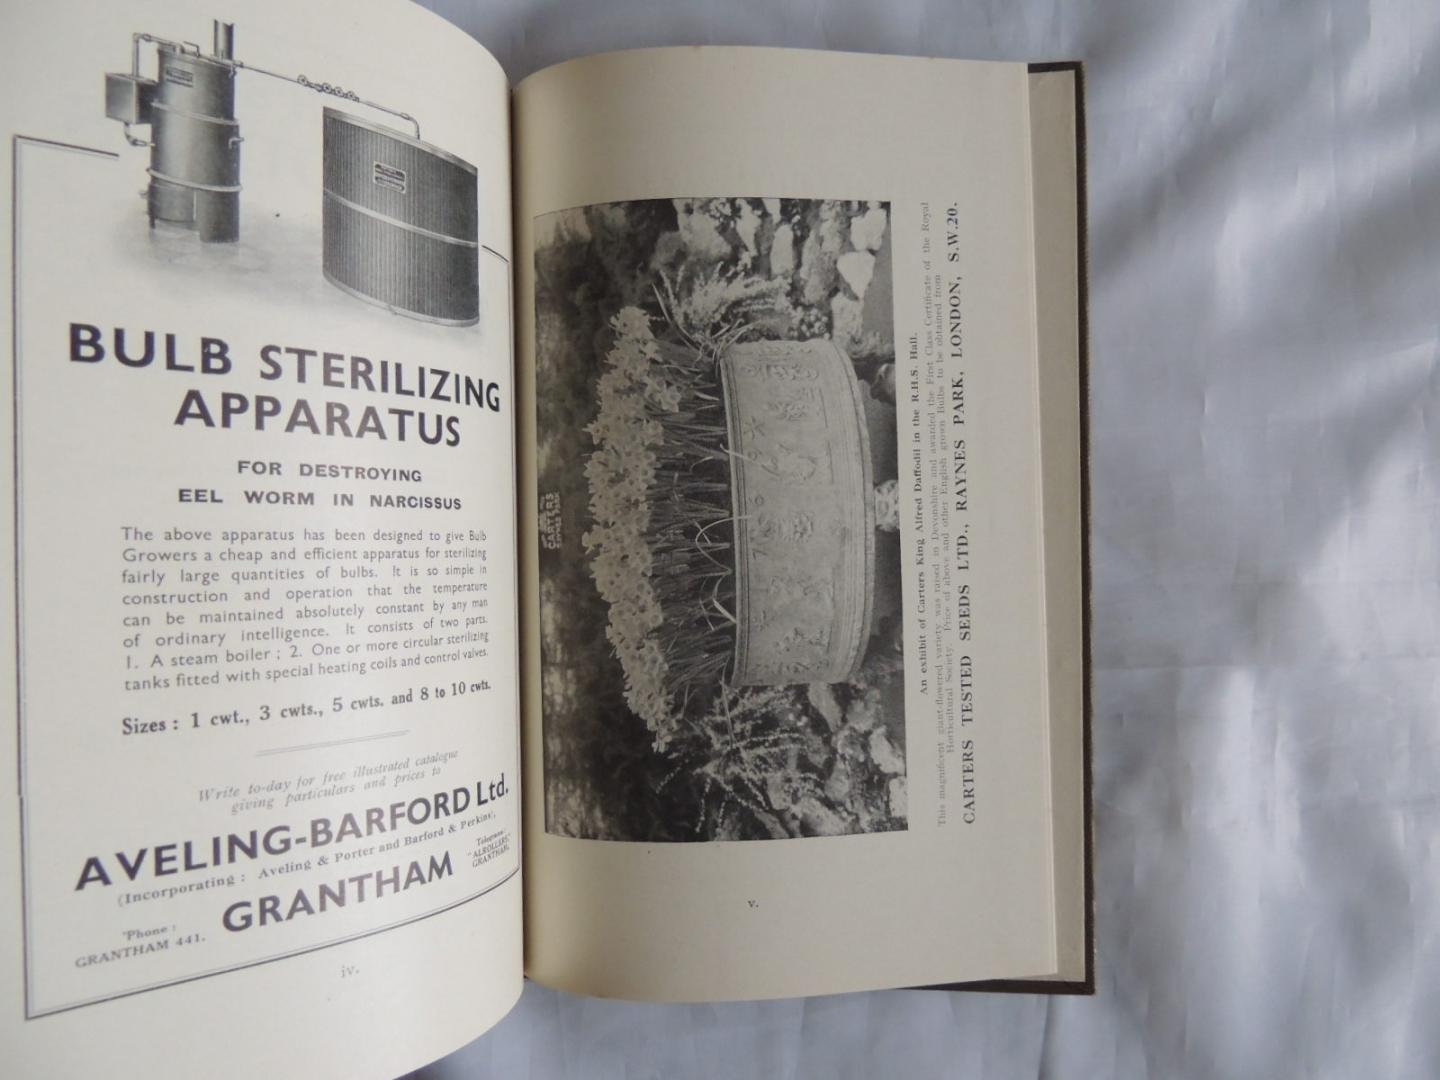 Chittenden F J - Bowles E A  - ( Zandbergen  Matthew ) - Daffodil and Tulip yearbook - year book ( keukenhof ) 1933 - 1967 Complete